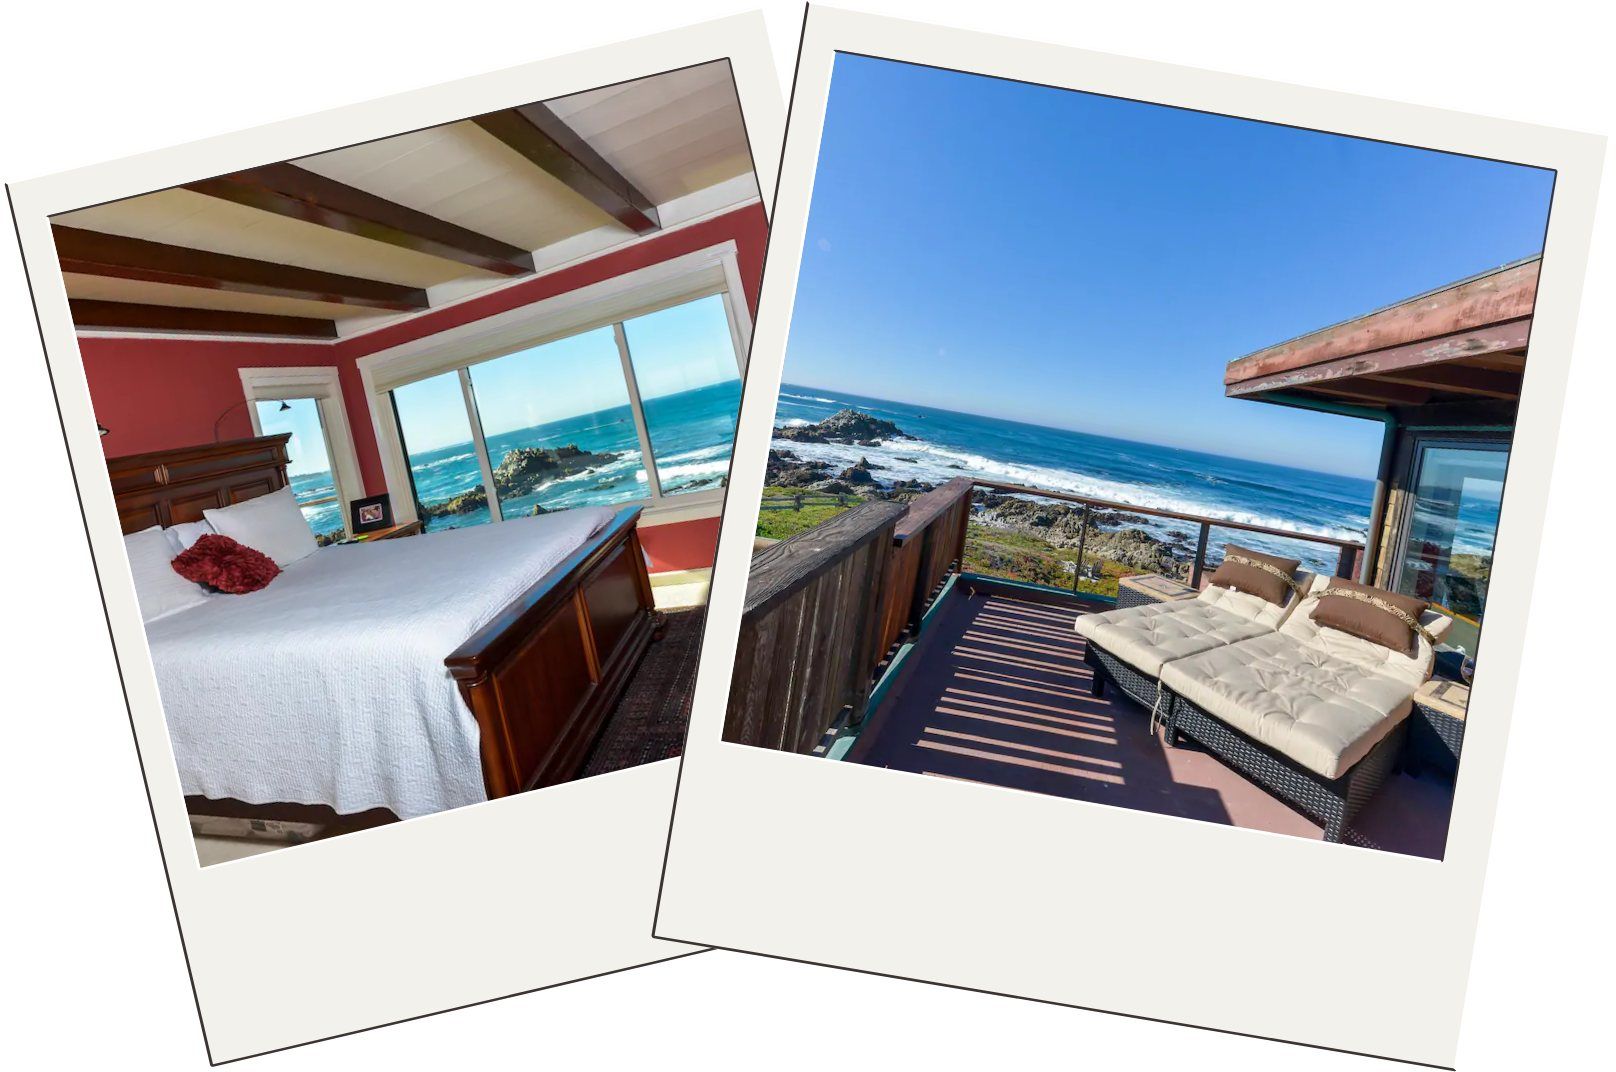 Top Airbnbs in Big Sur, Monterey & Carmel